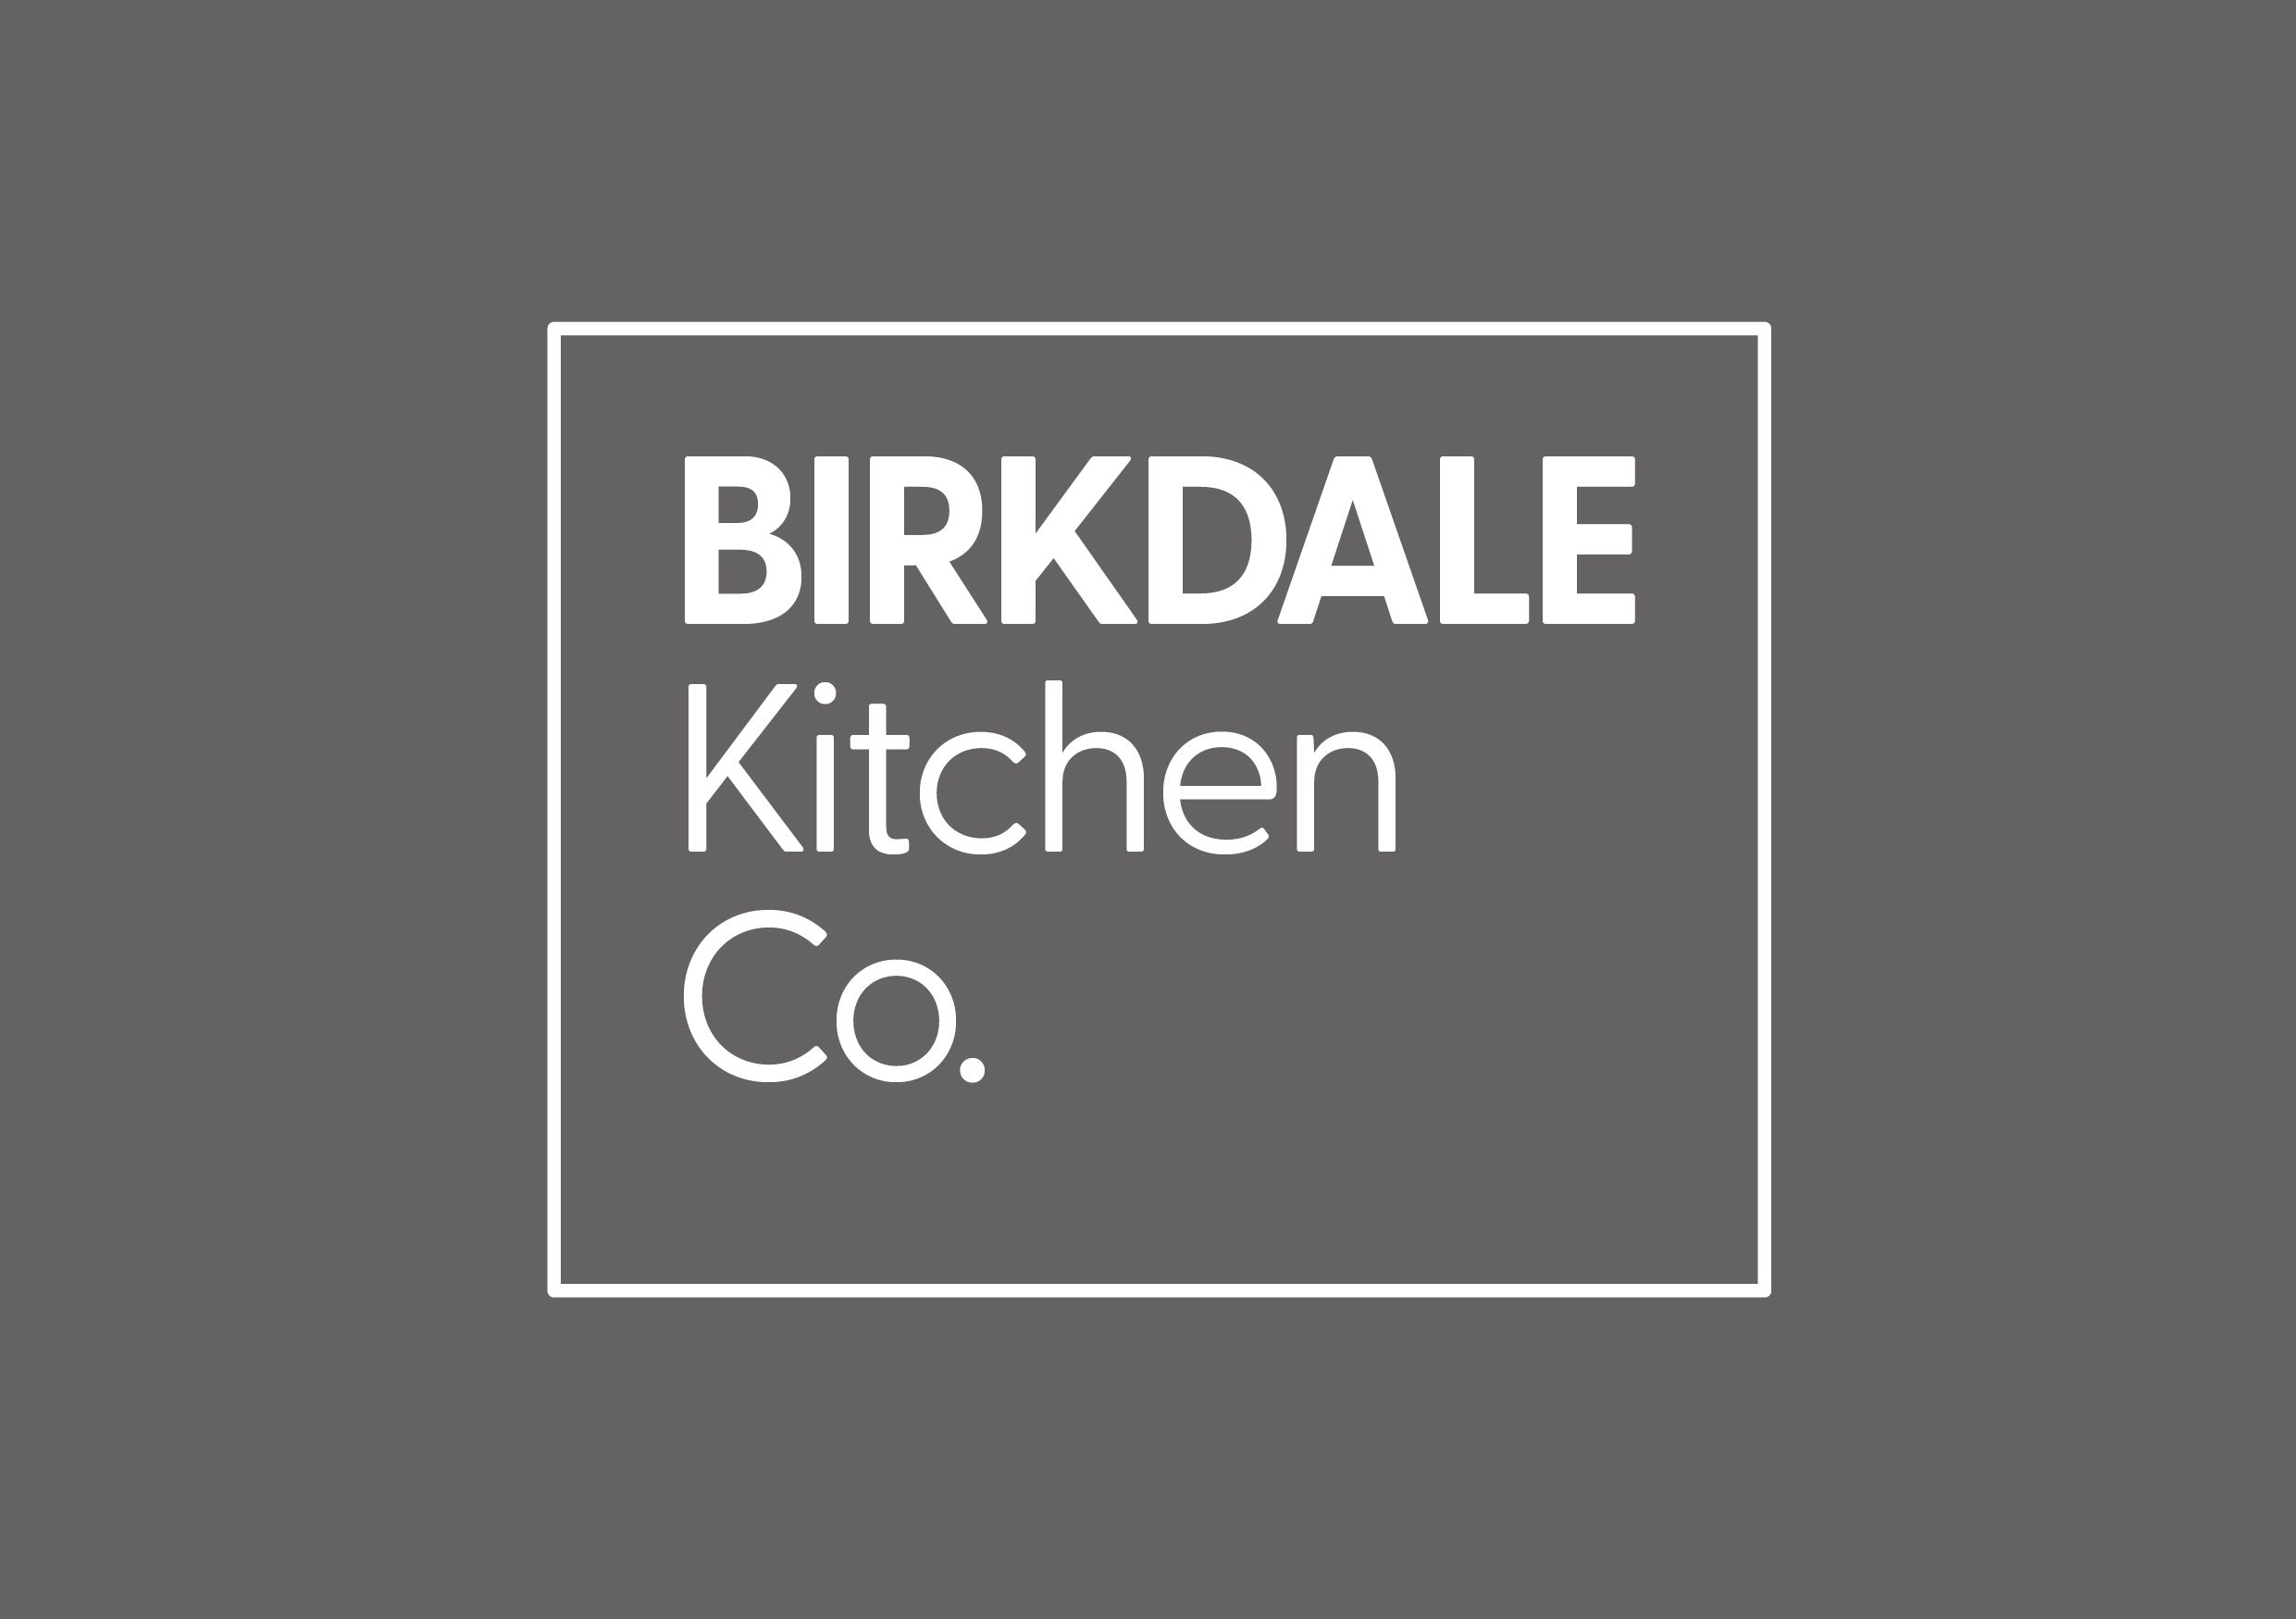 Birkdale Kitchen Co.